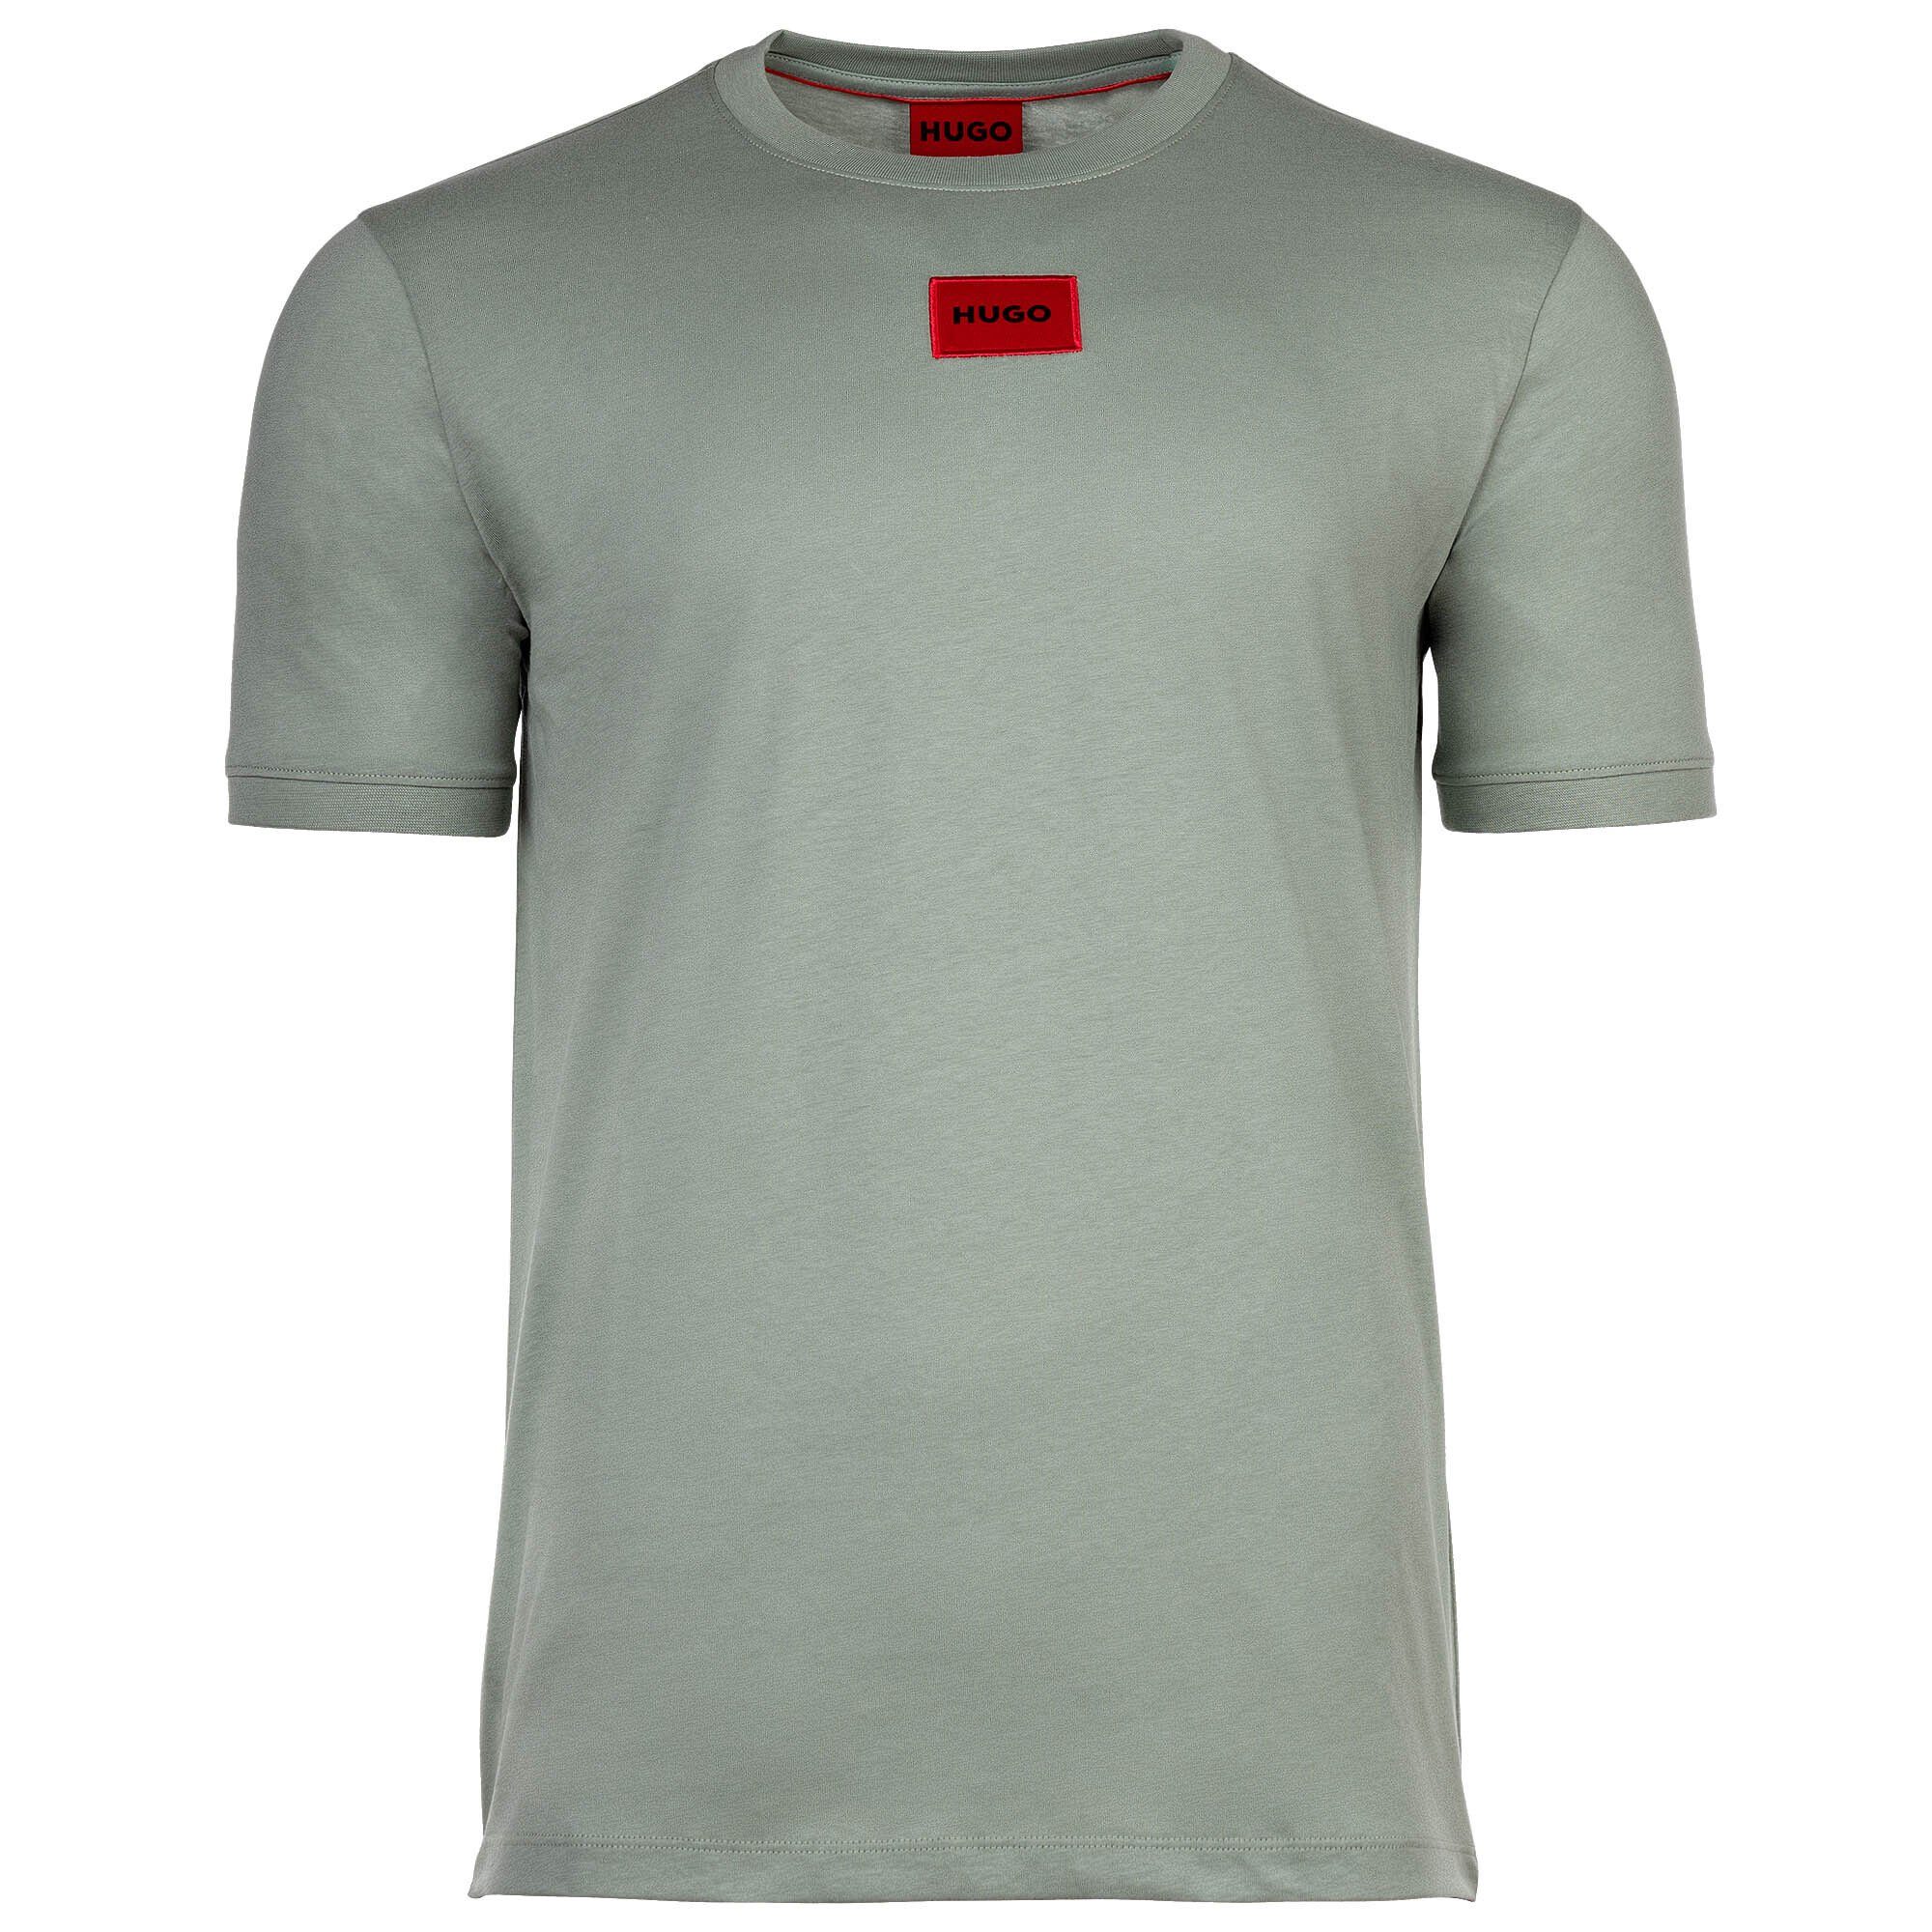 T-Shirt (Pastel Grün Green) Rundhals - HUGO Diragolino212 T-Shirt Herren